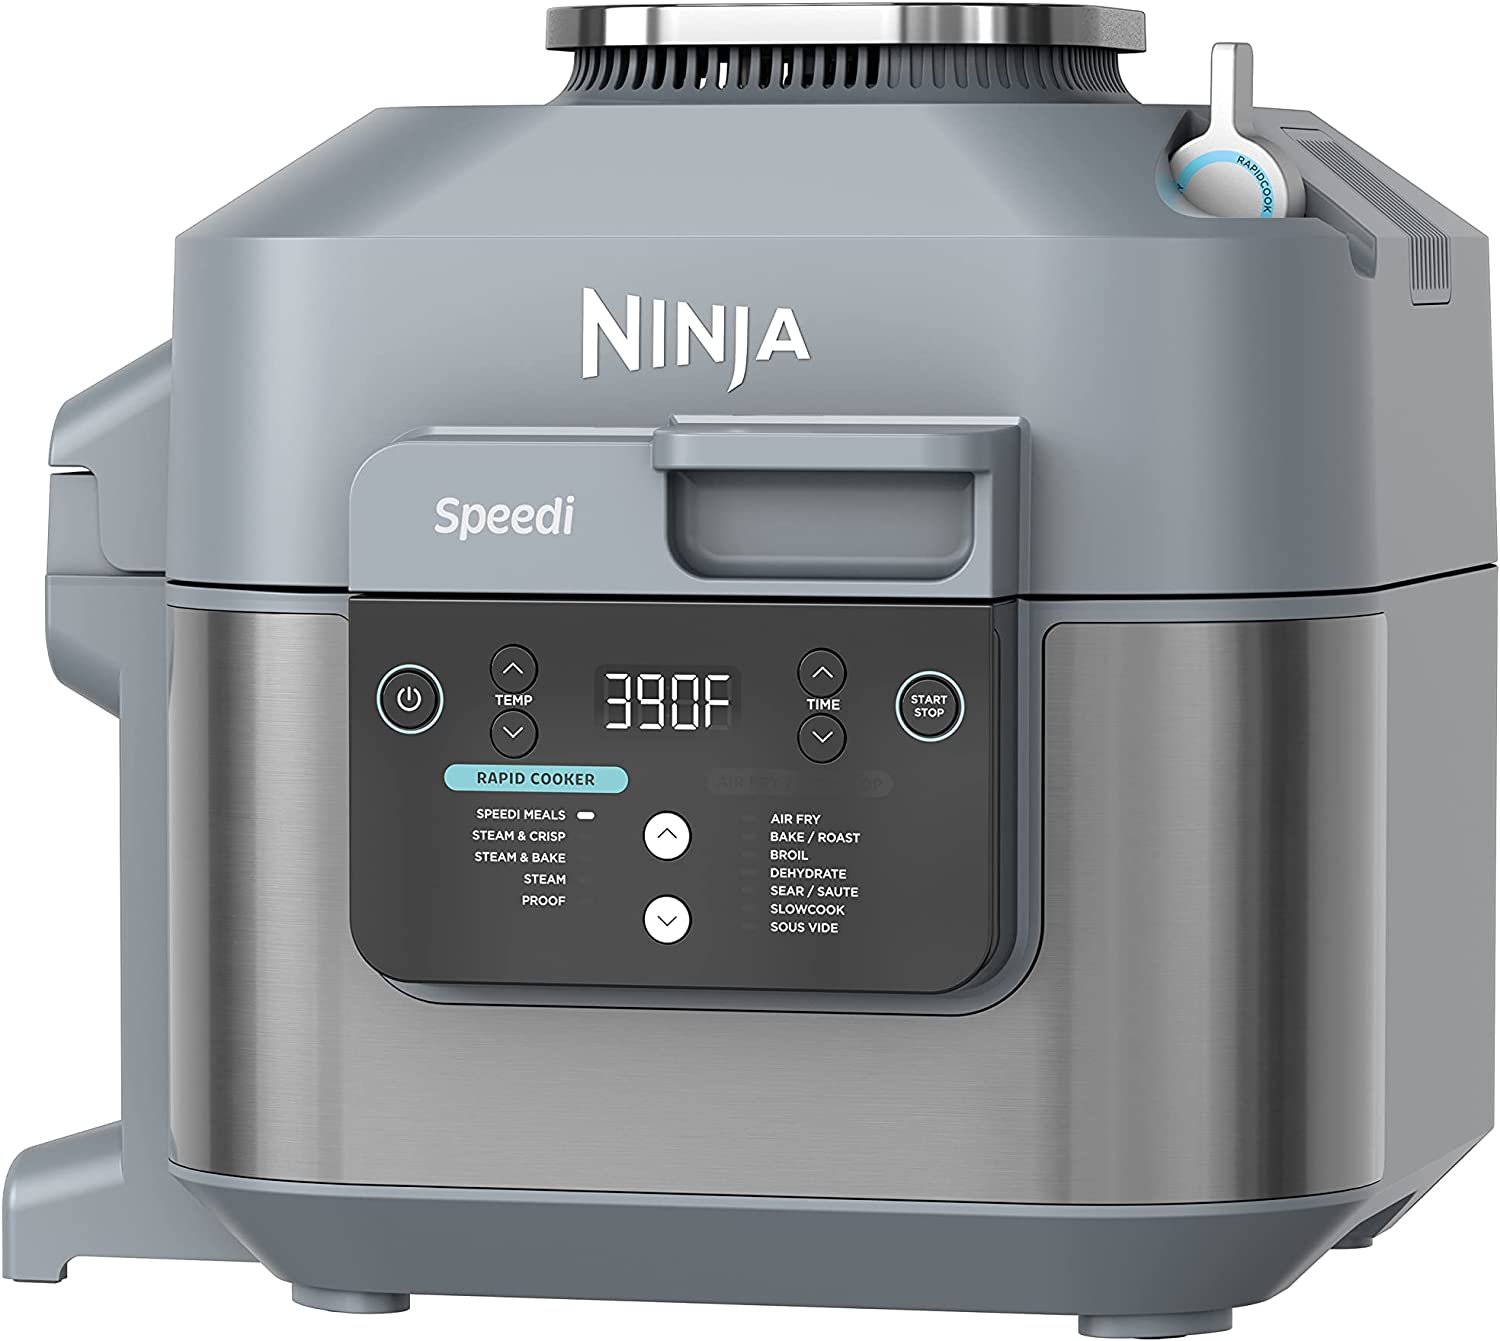 Review of - Ninja SF301 Speedi Rapid Cooker & Air Fryer